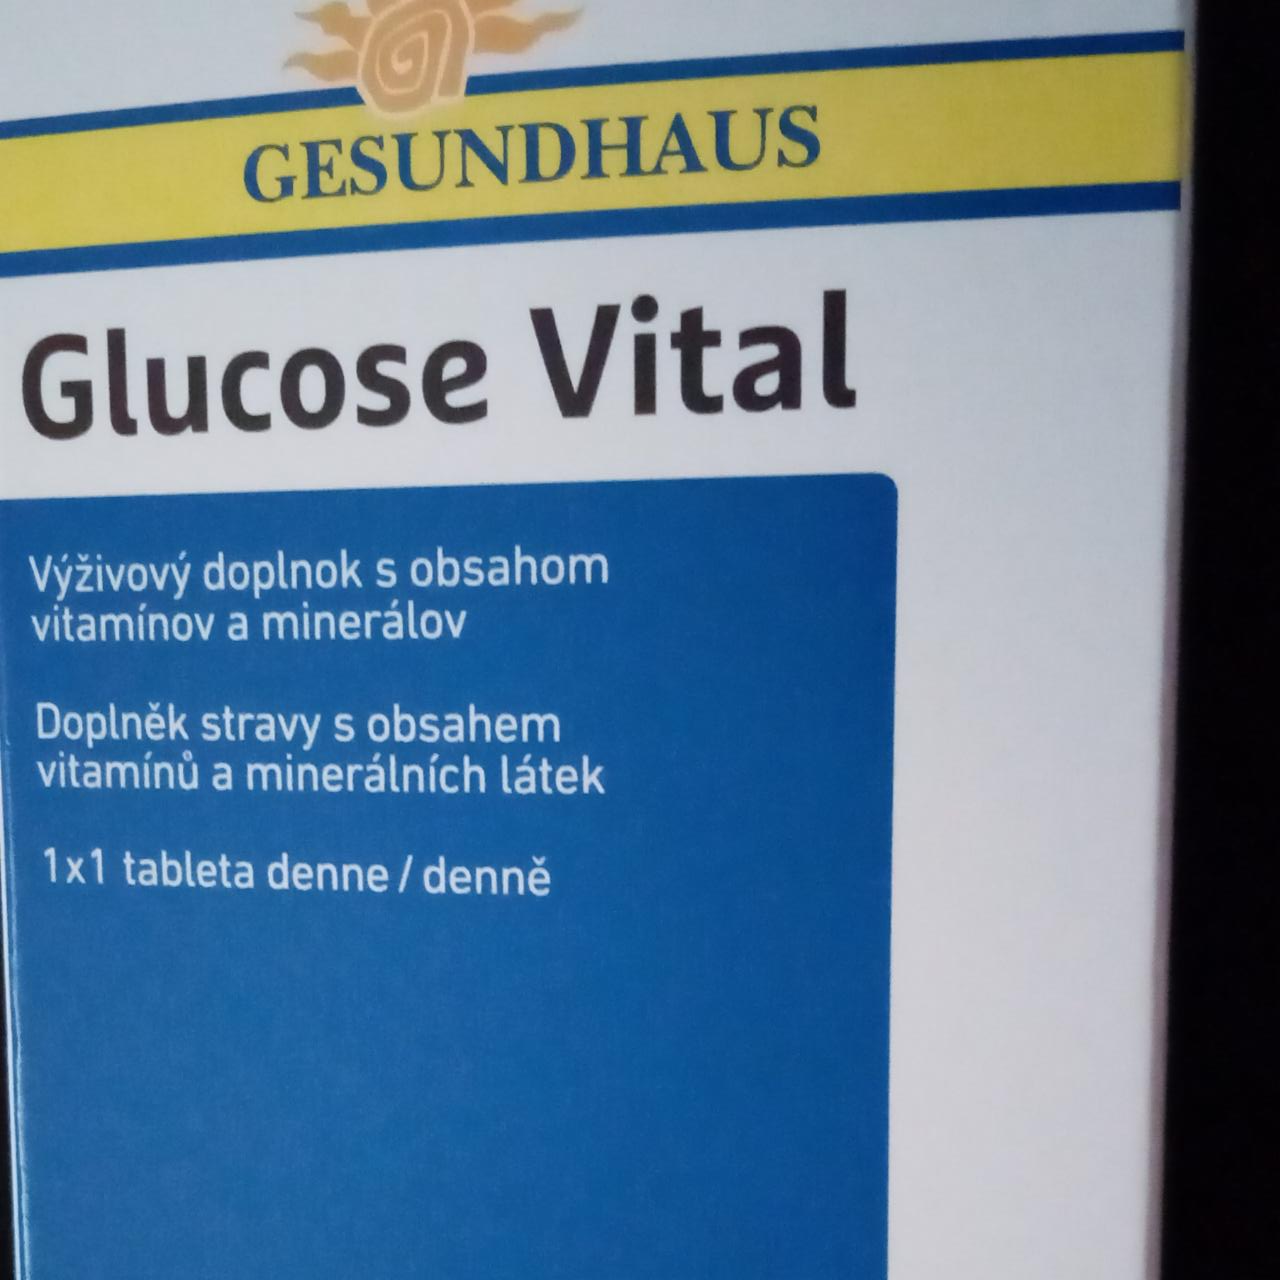 Fotografie - Glucose Vital Gesundhaus